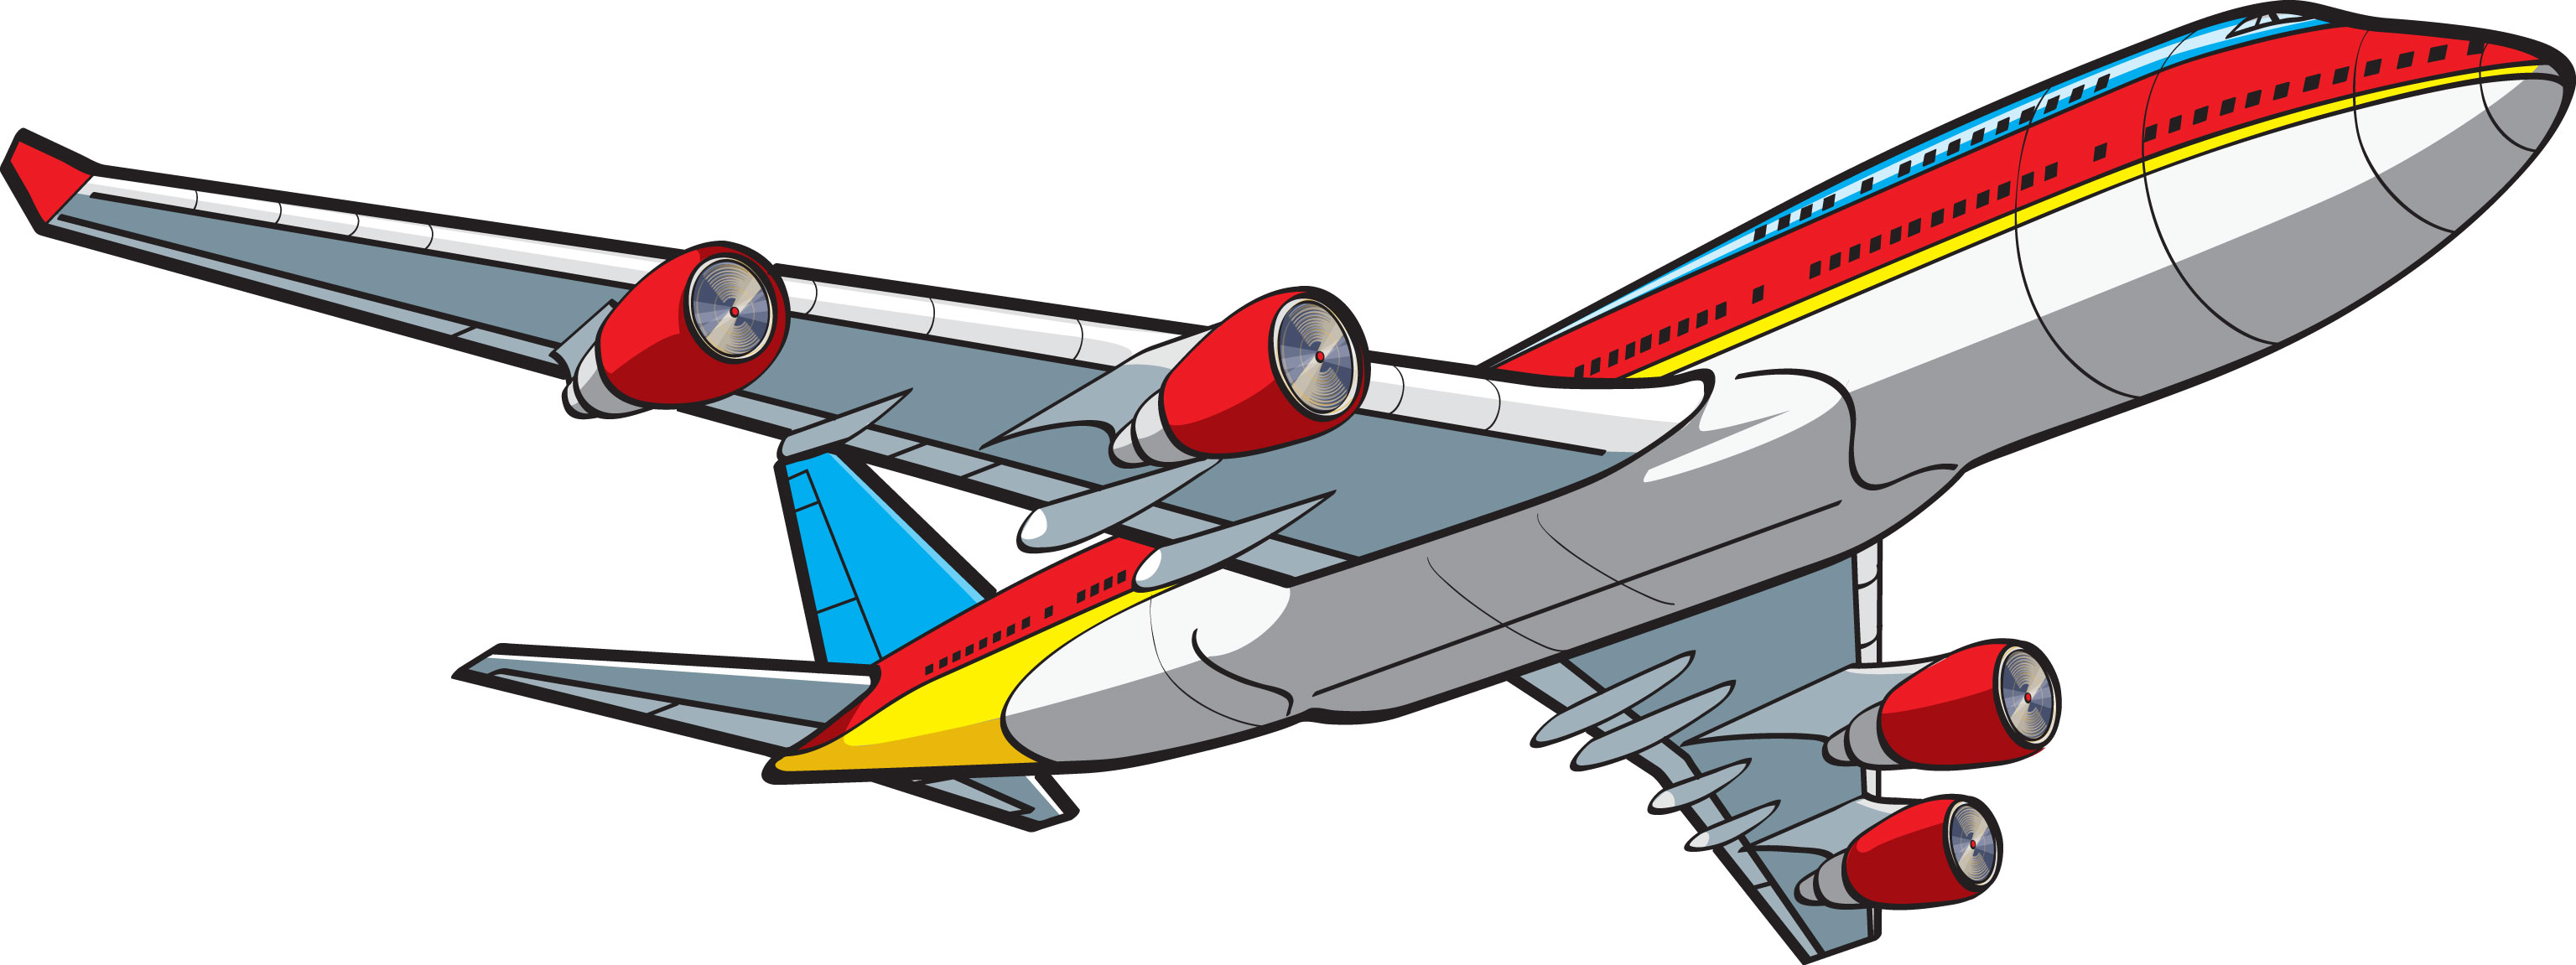 cute airplane clipart - Airplane Images Clip Art